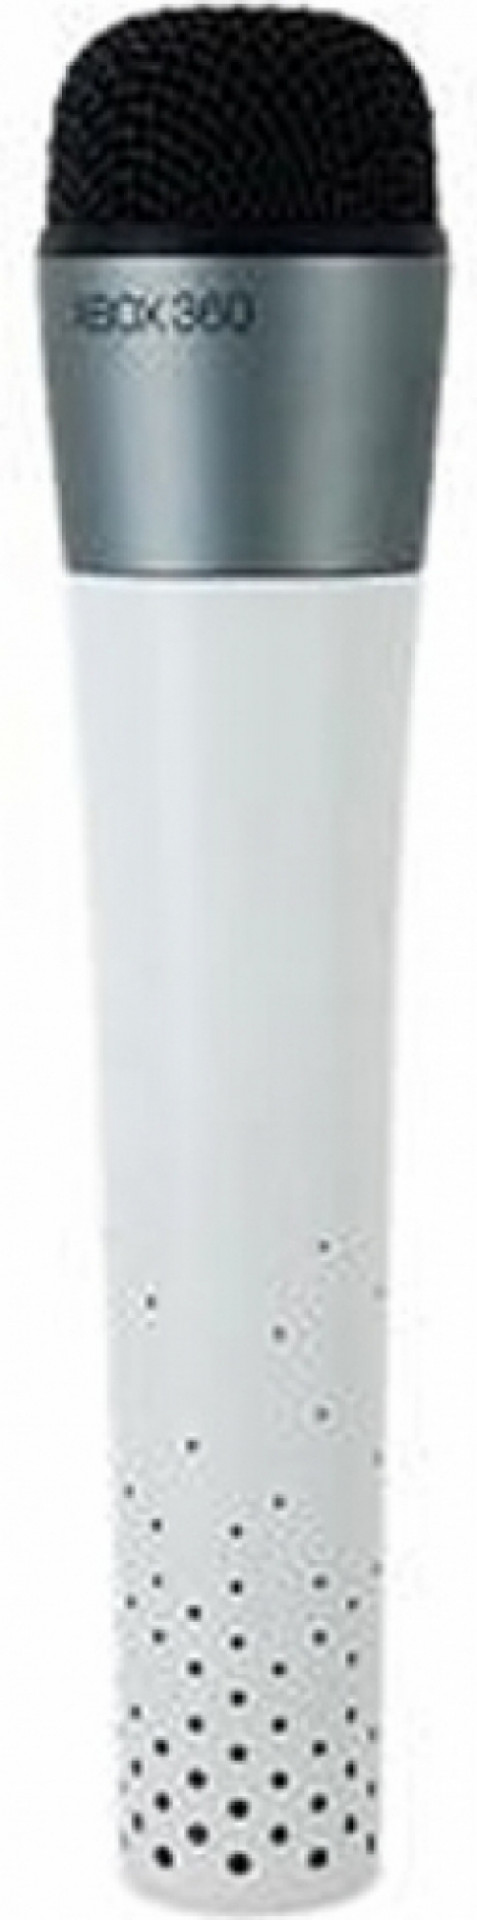 Xbox 360 Wireless Microphone (White)